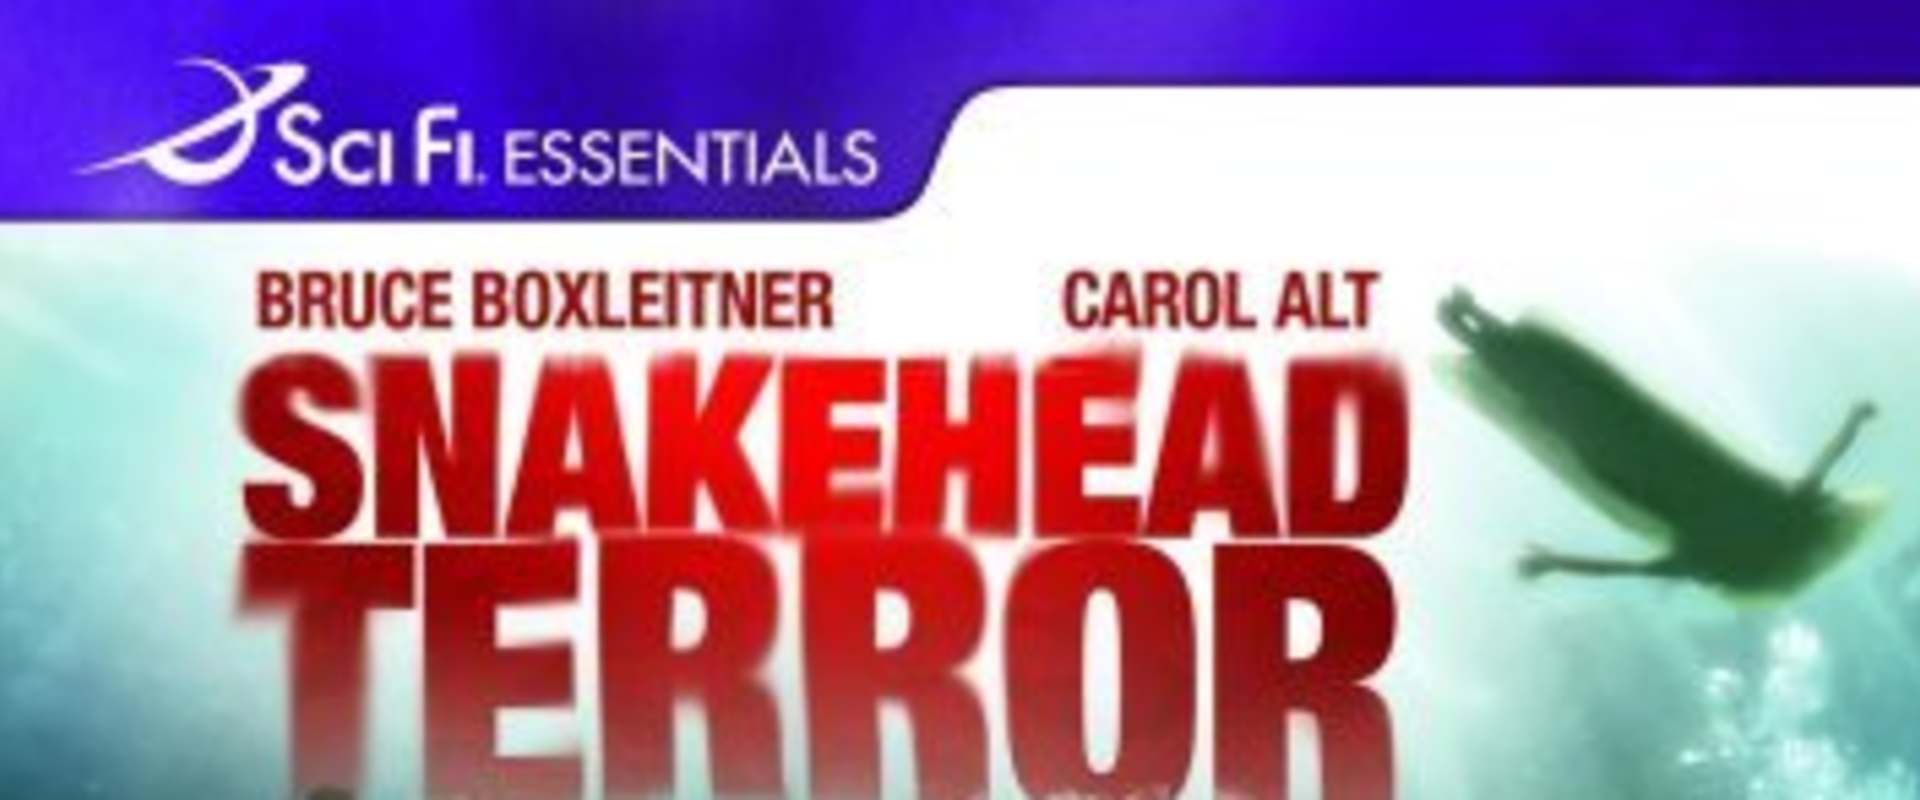 Snakehead Terror background 1